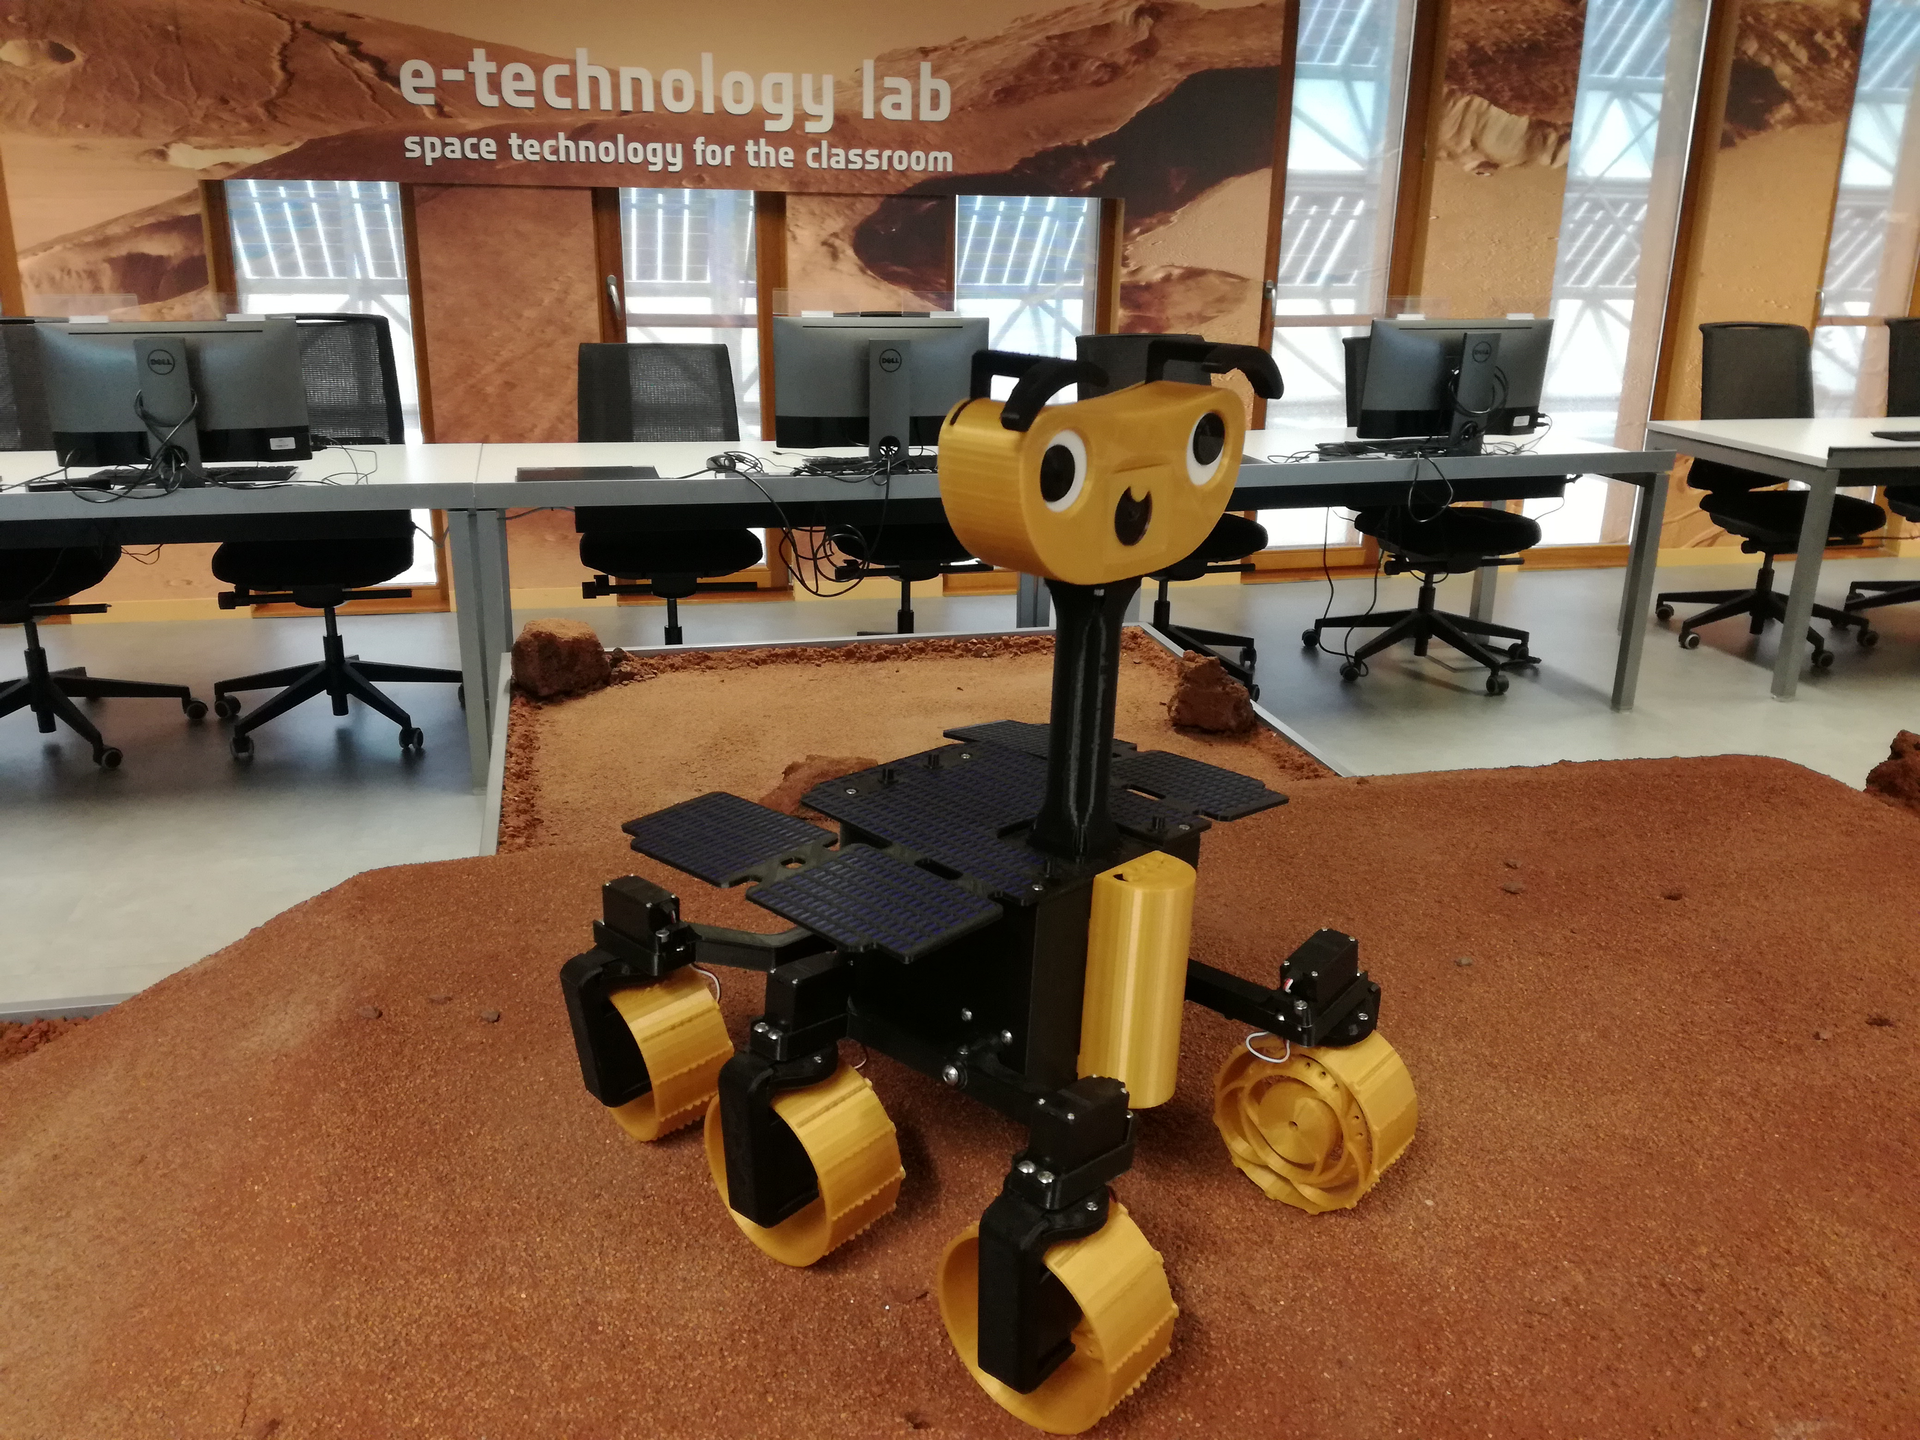 https://www.esa.int/var/esa/storage/images/esa_multimedia/images/2022/08/practical_sessions_of_the_robotics_workshop_will_make_use_of_the_exomy_robot_developed_at_esa_s_planetary_robotics_lab/24386040-1-eng-GB/Practical_sessions_of_the_Robotics_Workshop_will_make_use_of_the_ExoMy_robot_developed_at_ESA_s_Planetary_Robotics_Lab_pillars.png